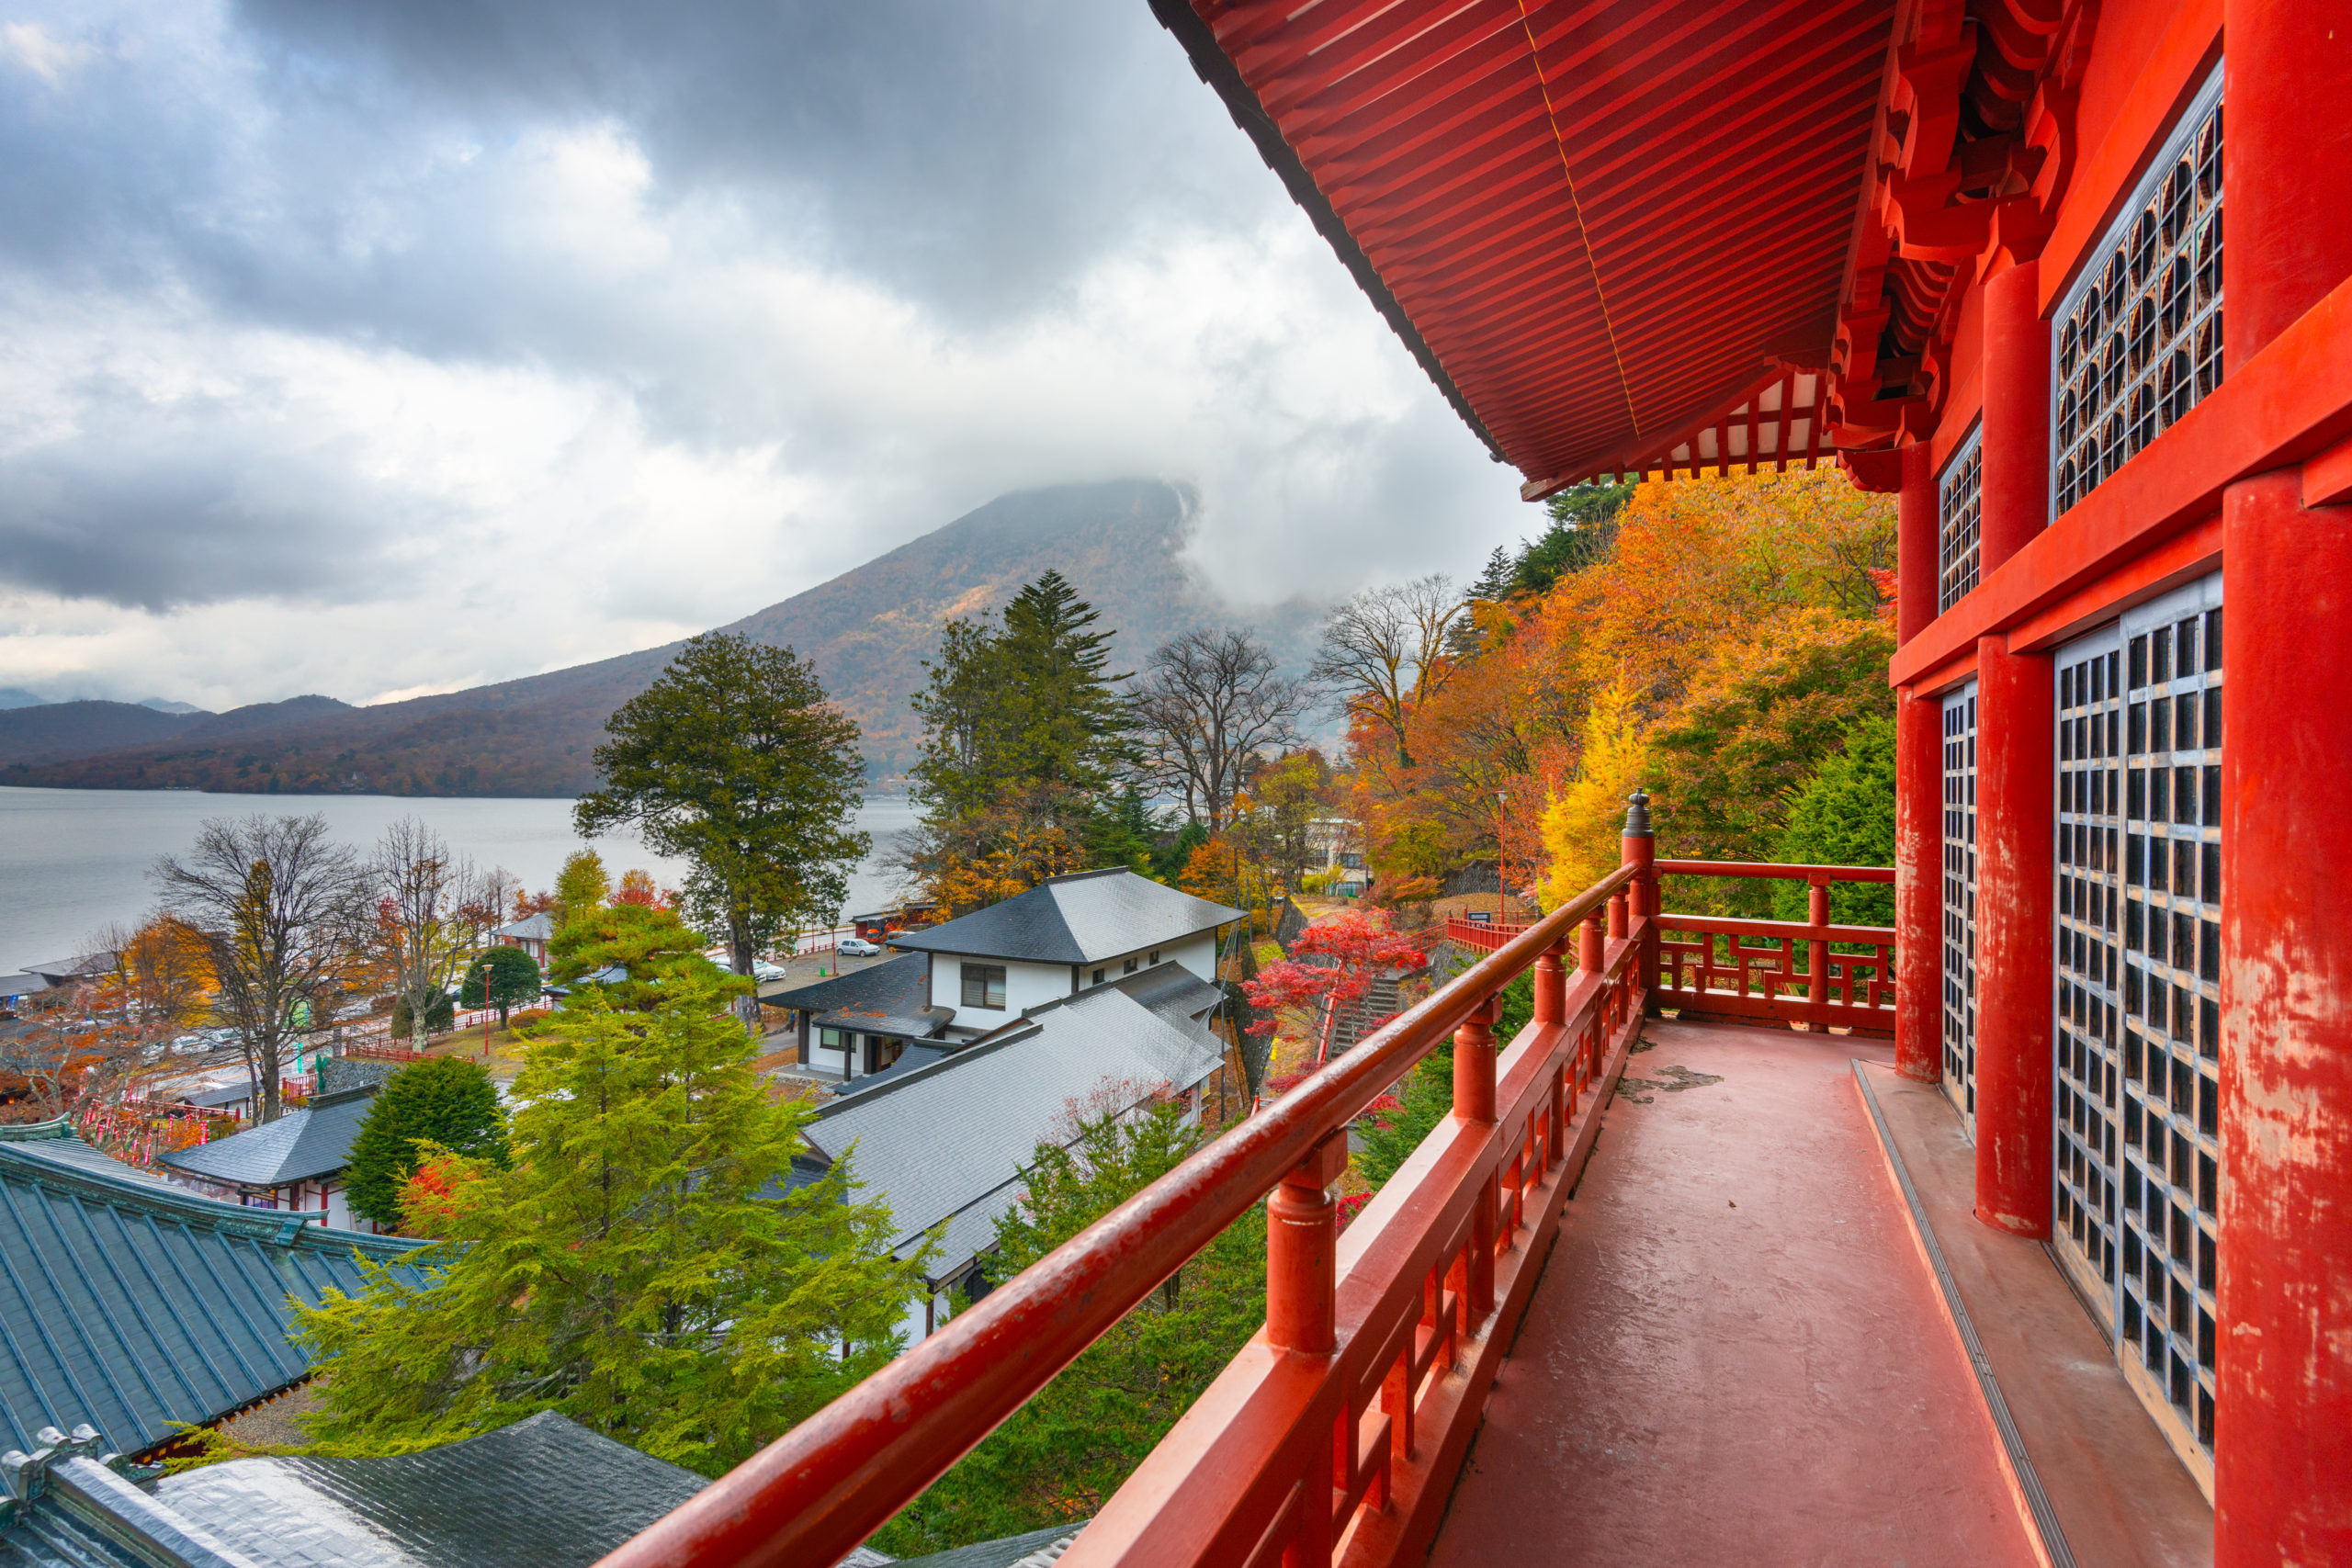 Nikko, Japan viewed in the autumn from Chuzen-ji Temple complex.